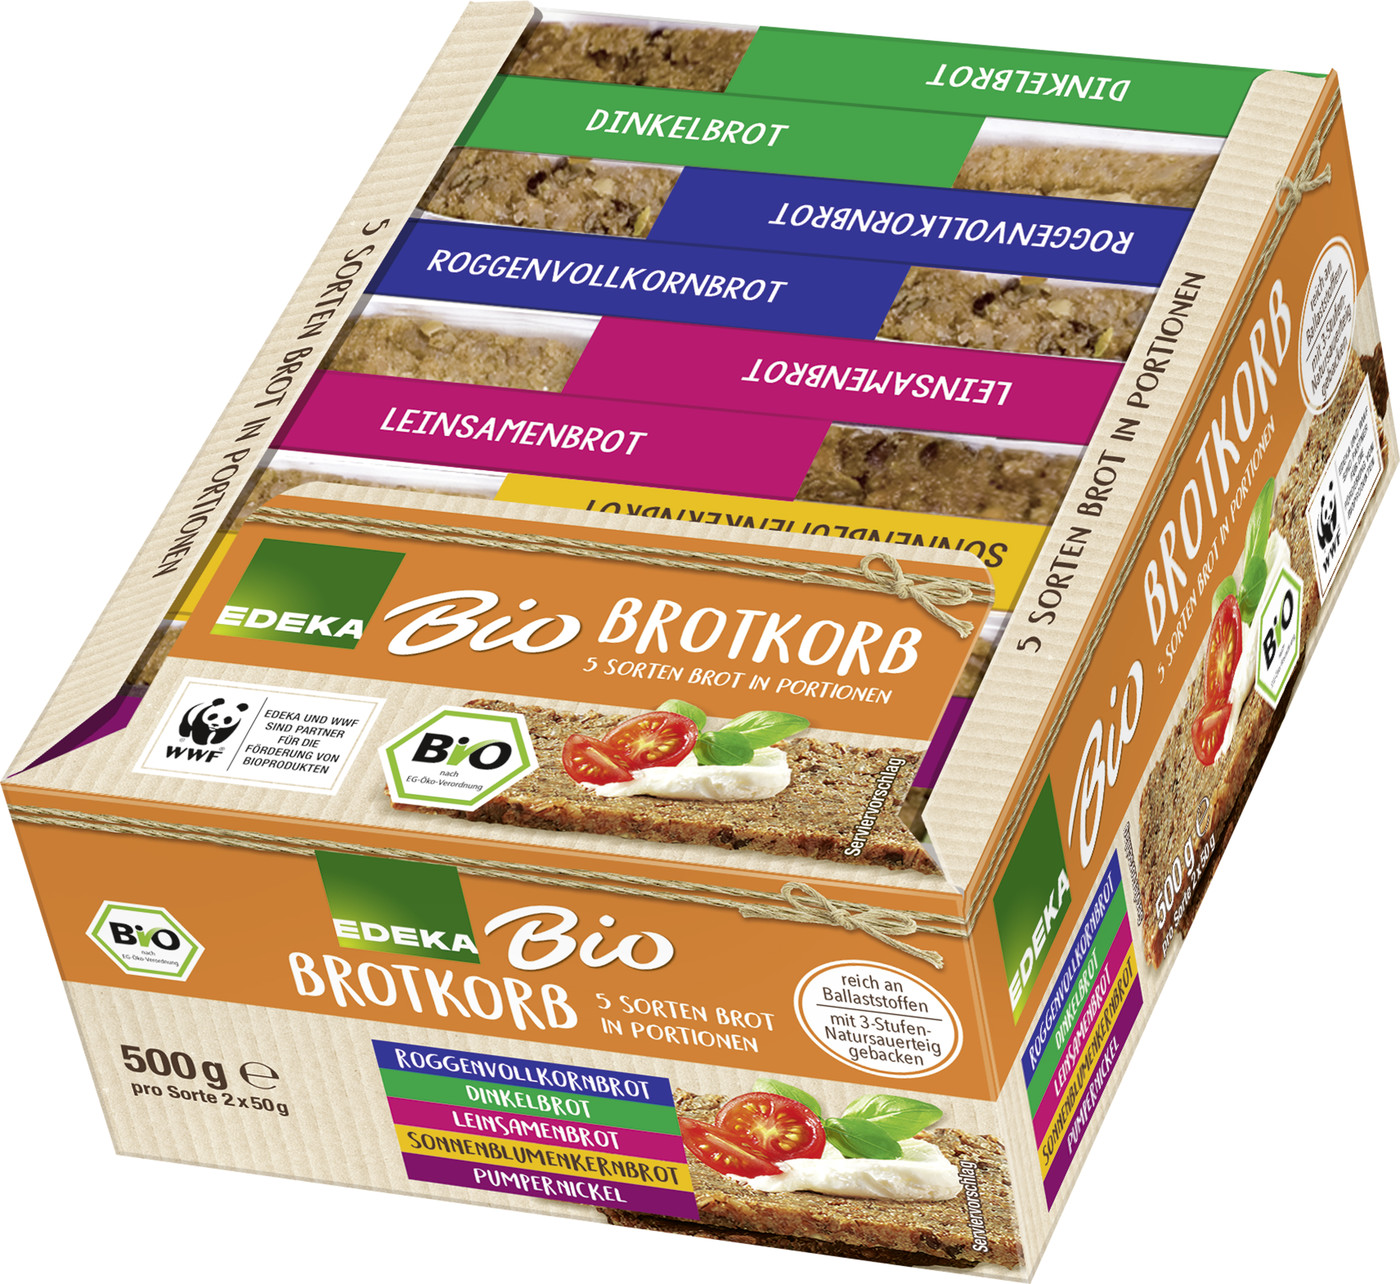 EDEKA Bio Brotkorb 5 Sorten Brot in Portionen 500G